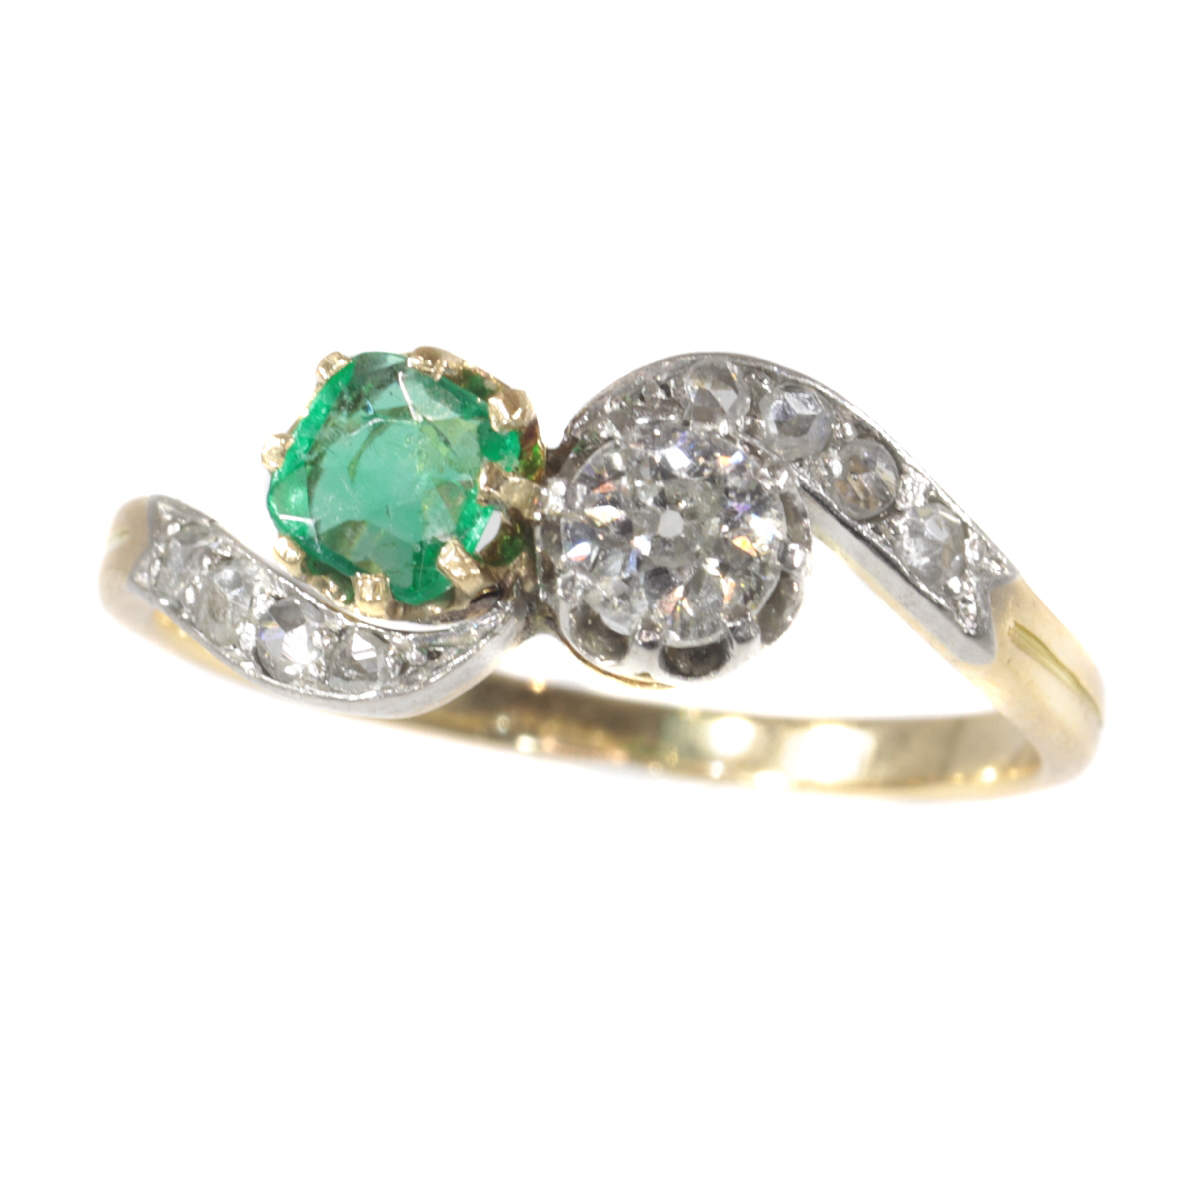 Antique Victorian style Romantic diamond and emerald toi et moi ring